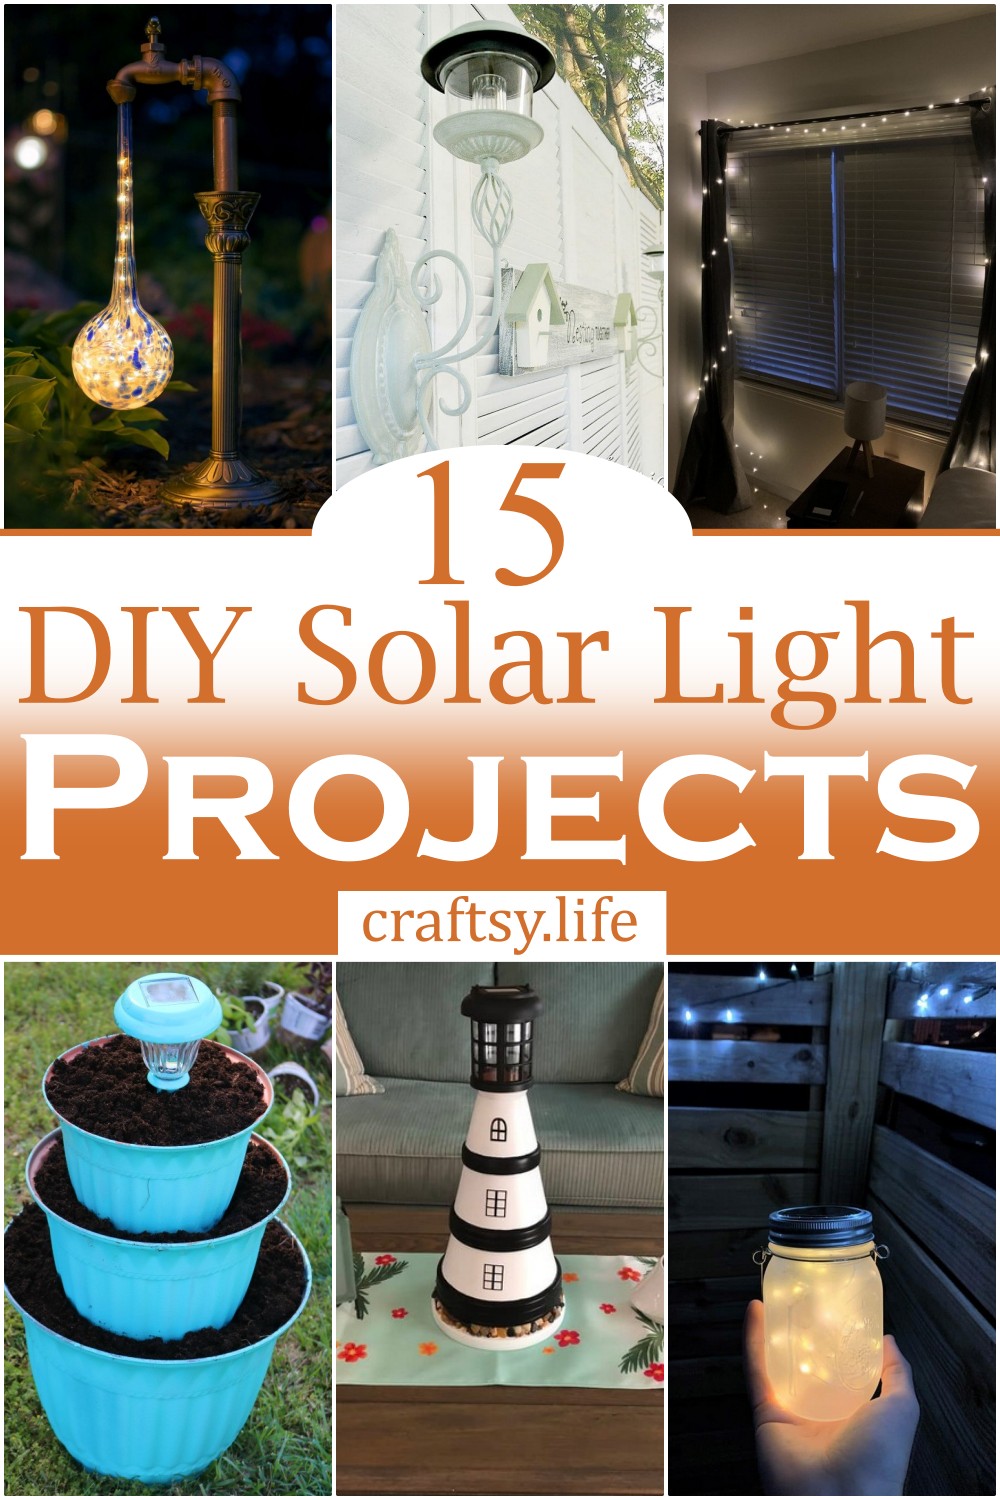 DIY Solar Light Projects